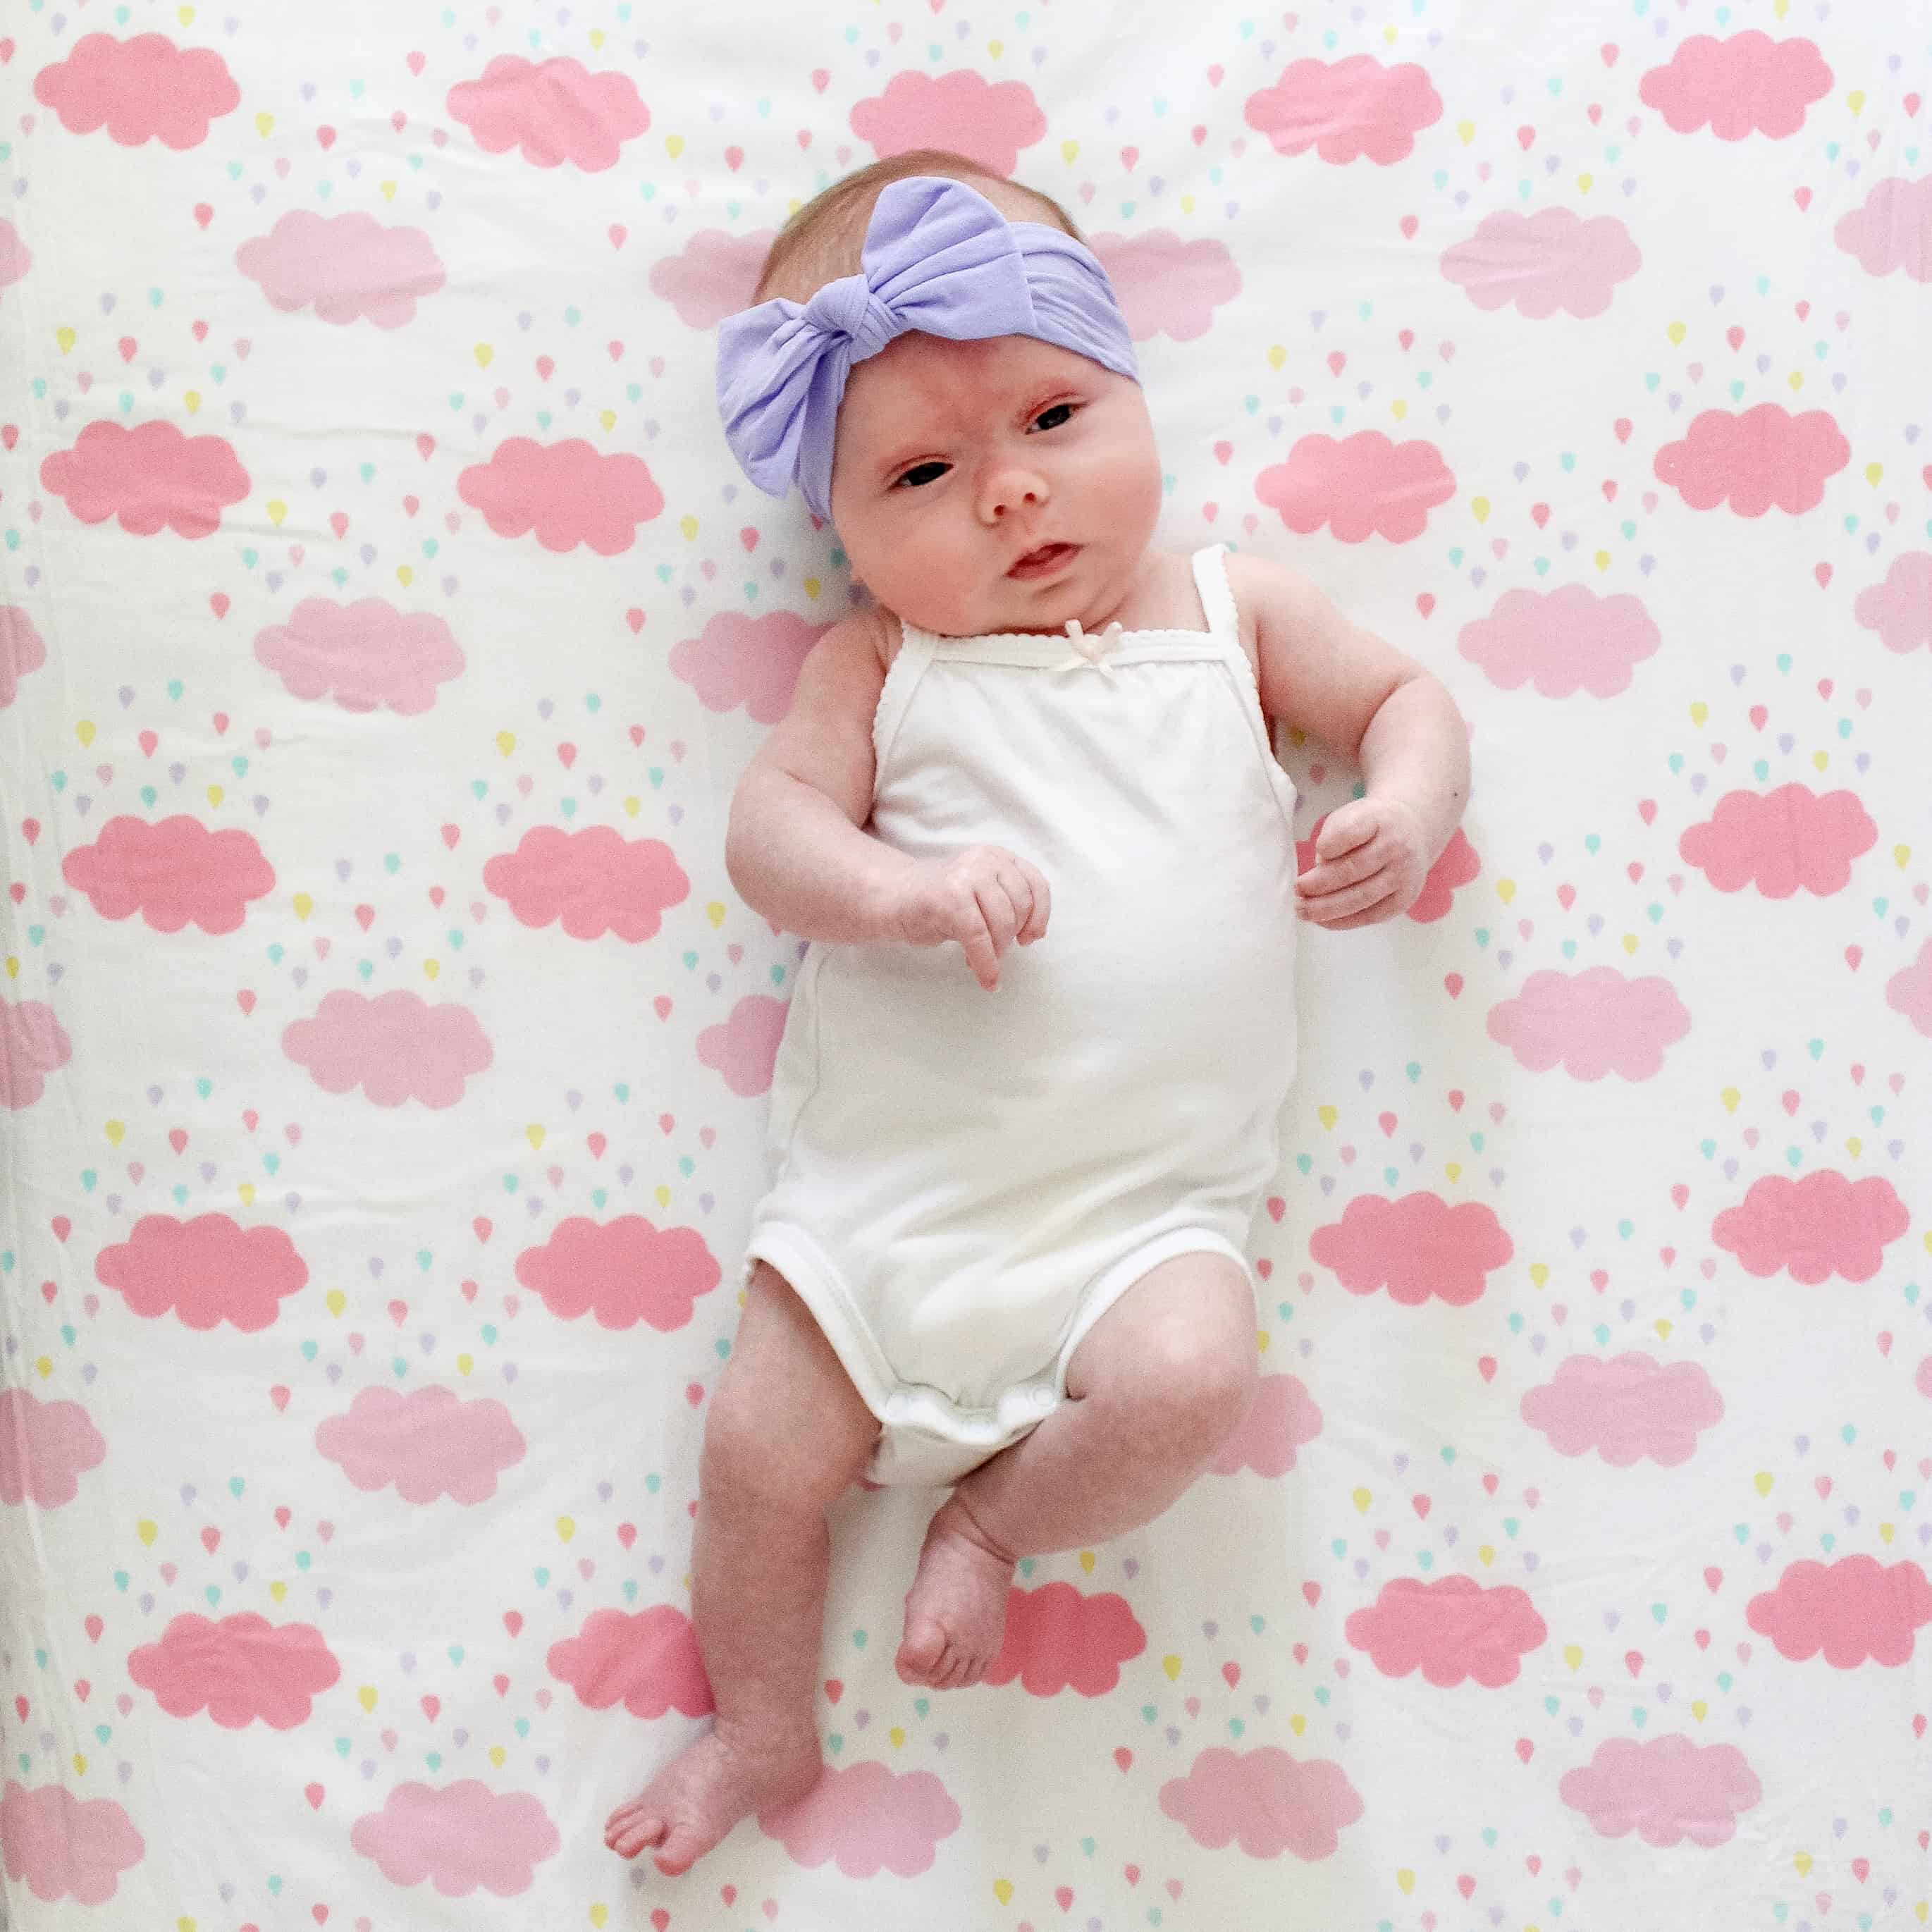 Baby girl on Pink Cloud sheet